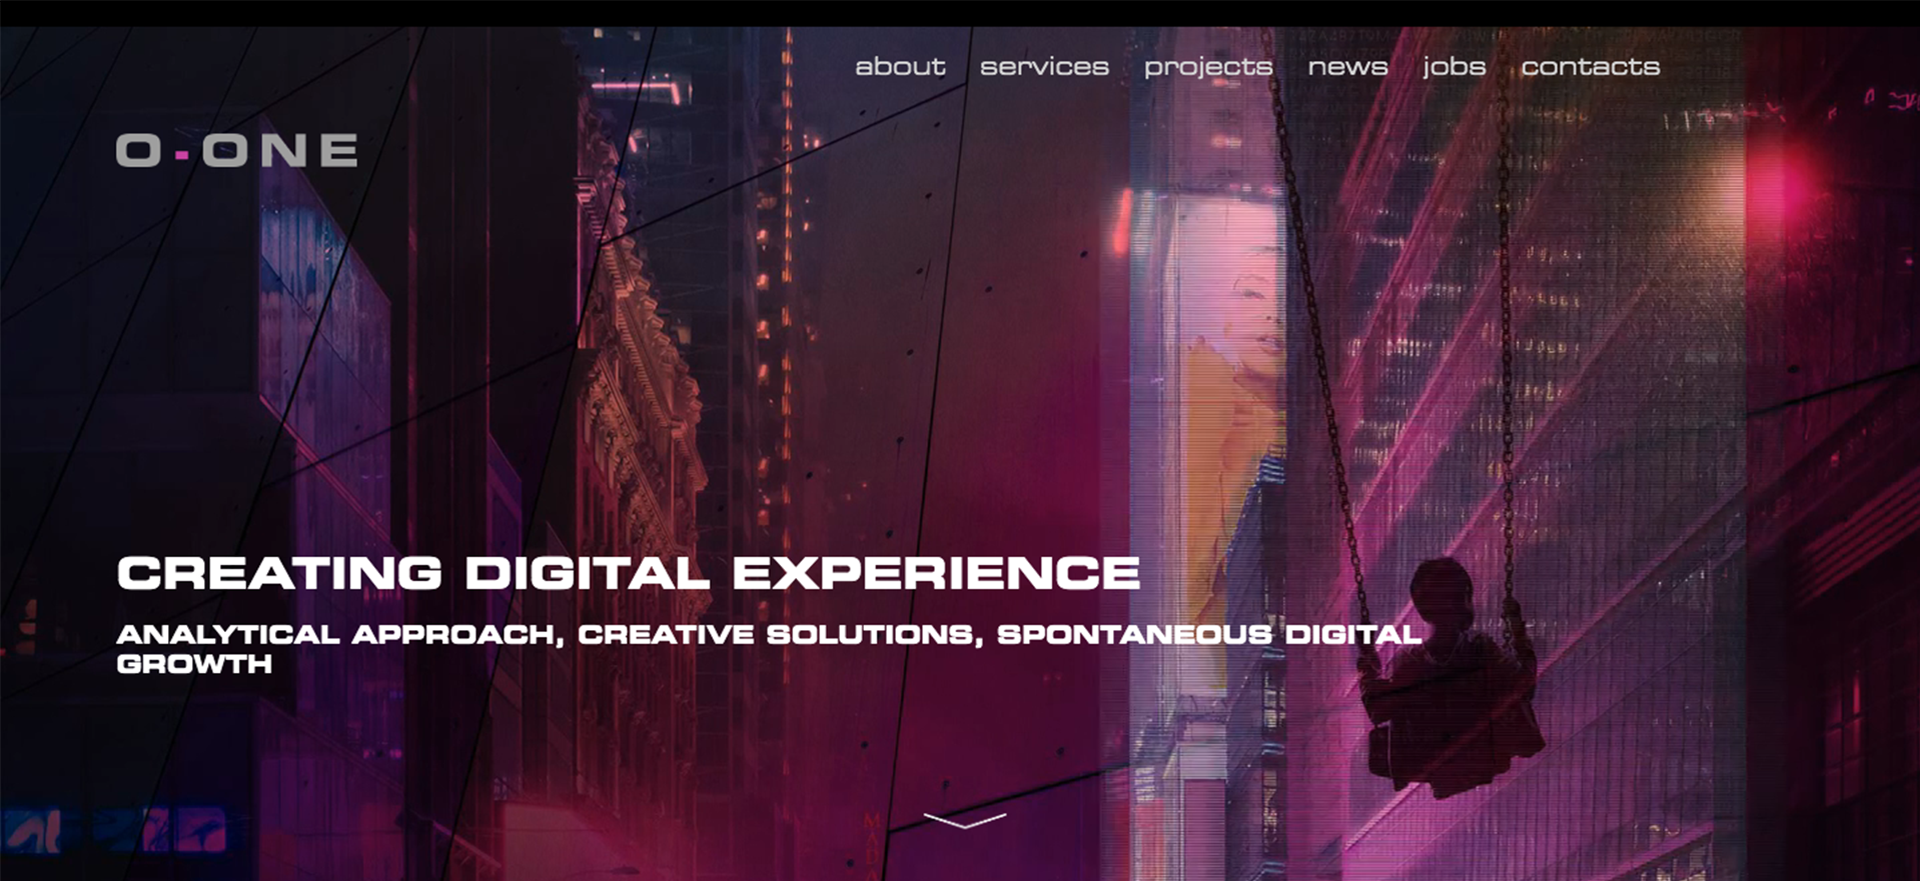 O-One lancia il metodo “Spontaneous digital growth” e presenta il nuovo sito